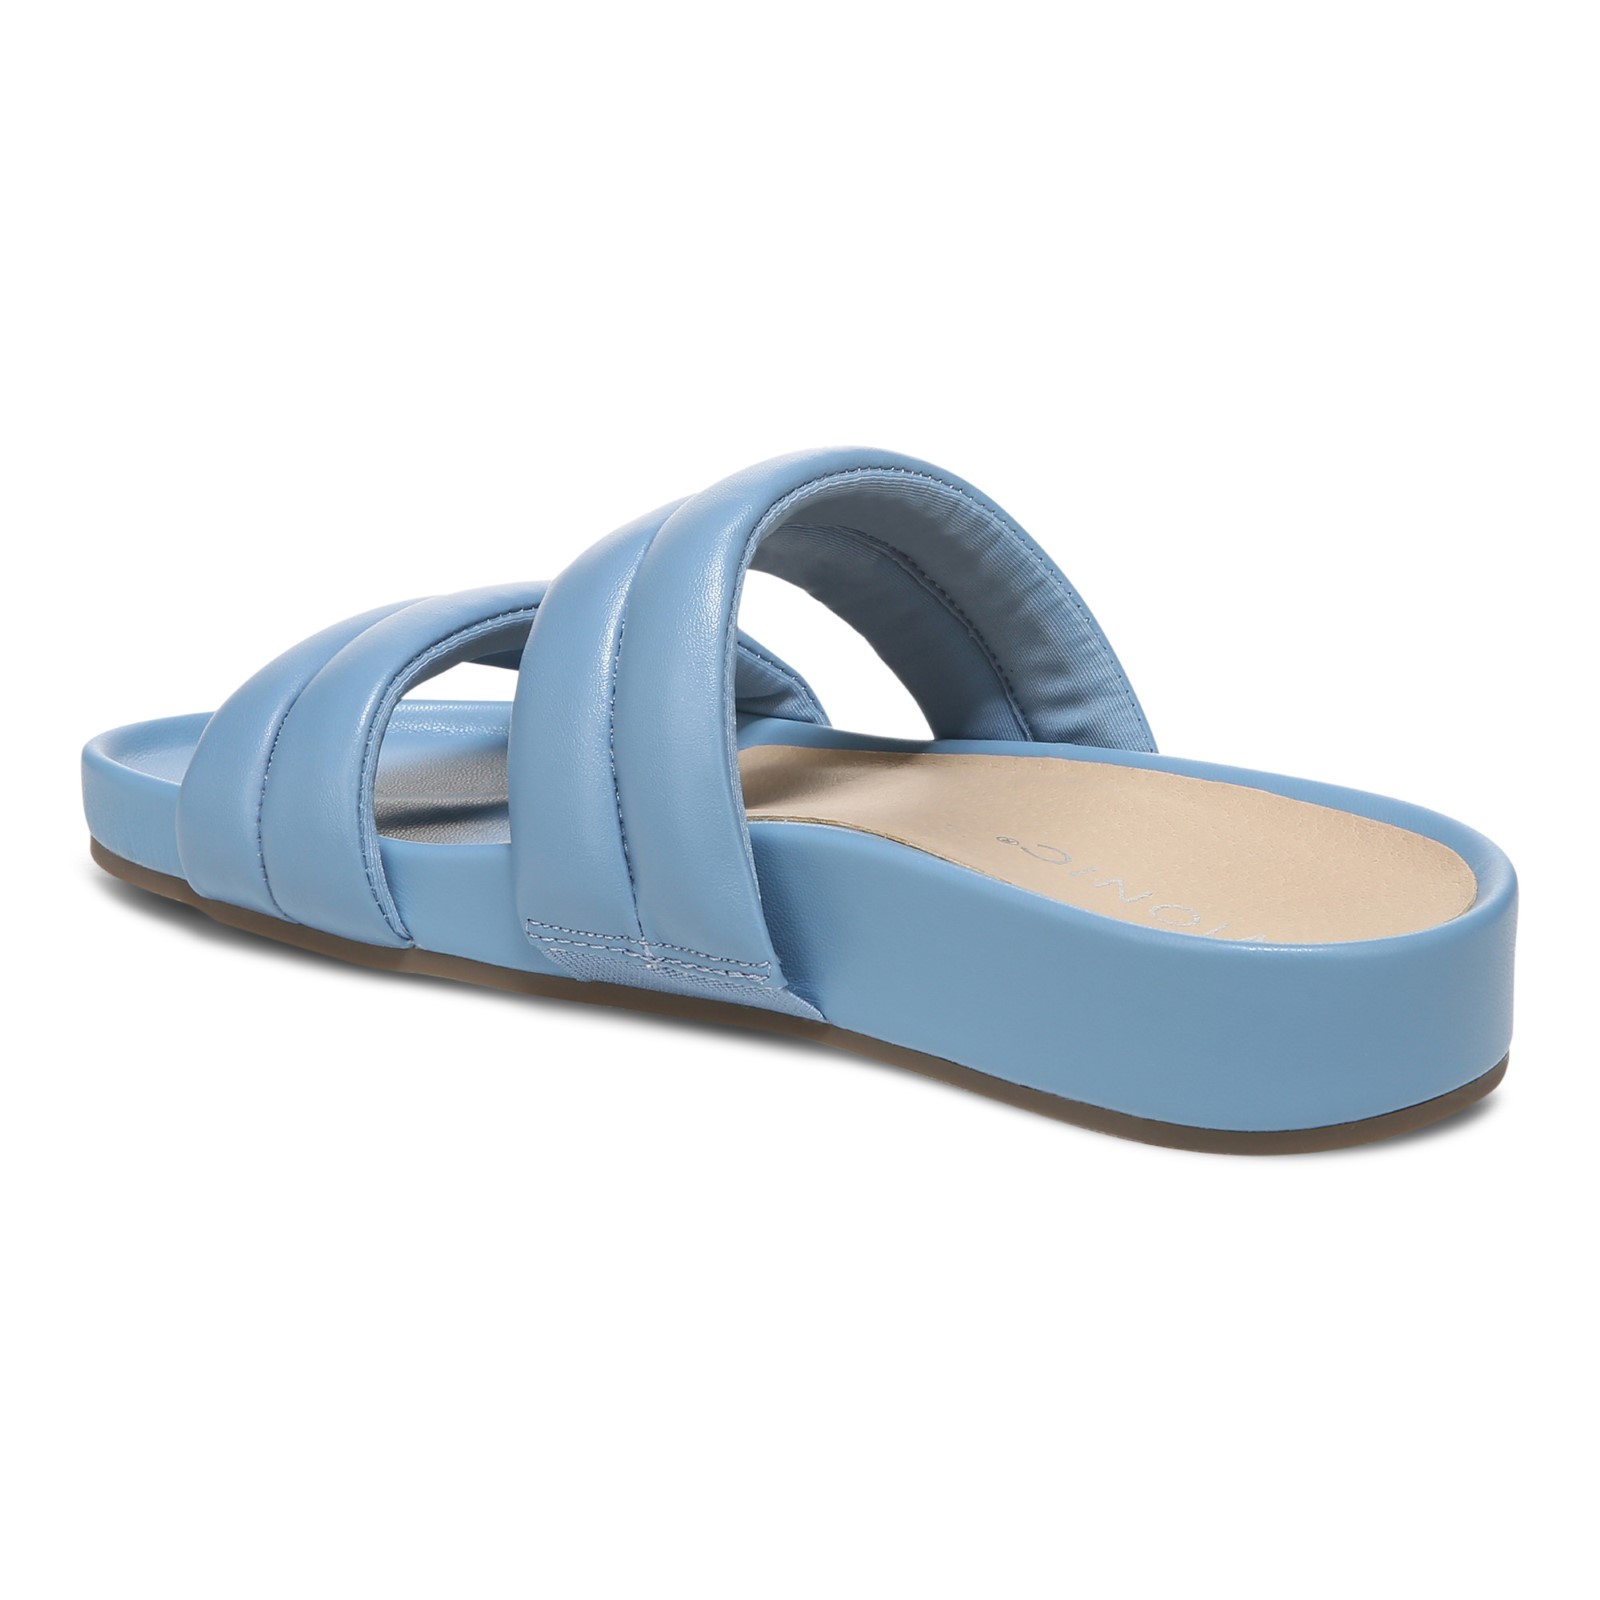 Vionic Mayla Women's Supportive Slide Sandals - Free Shipping